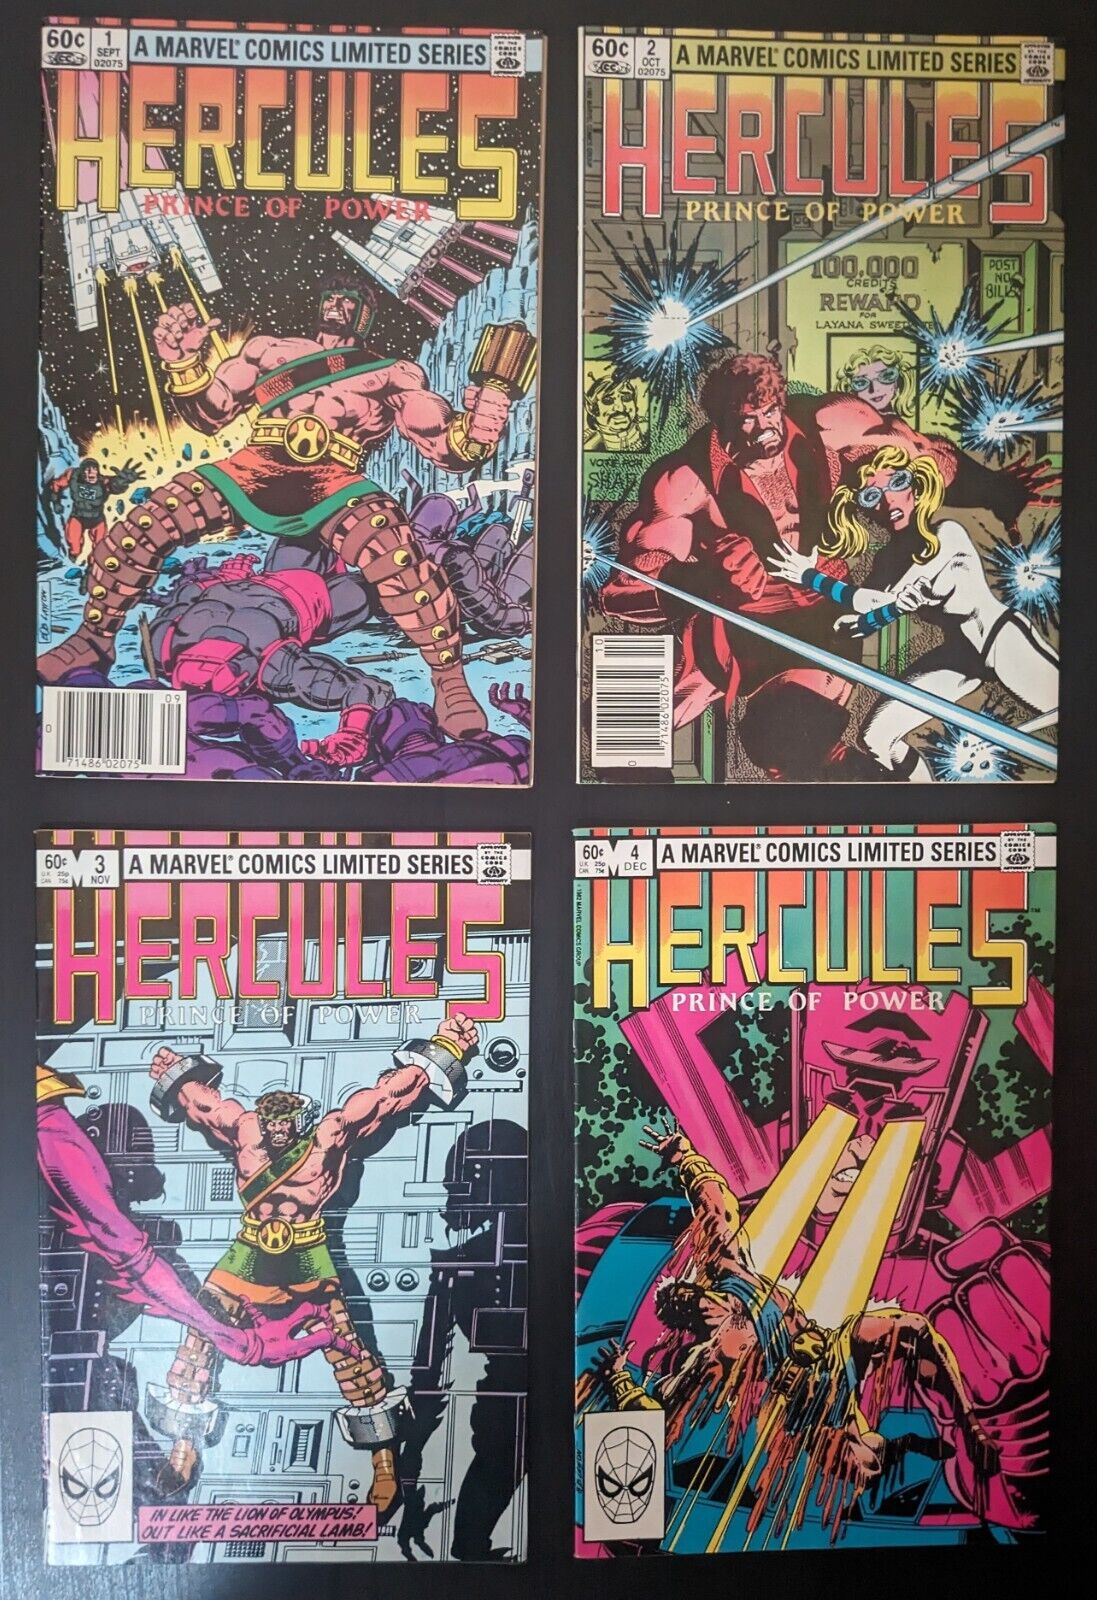 Marvel Comics HERCULES #1-4 Volume 1 Complete Limited Series 1982 LOOKS GREAT